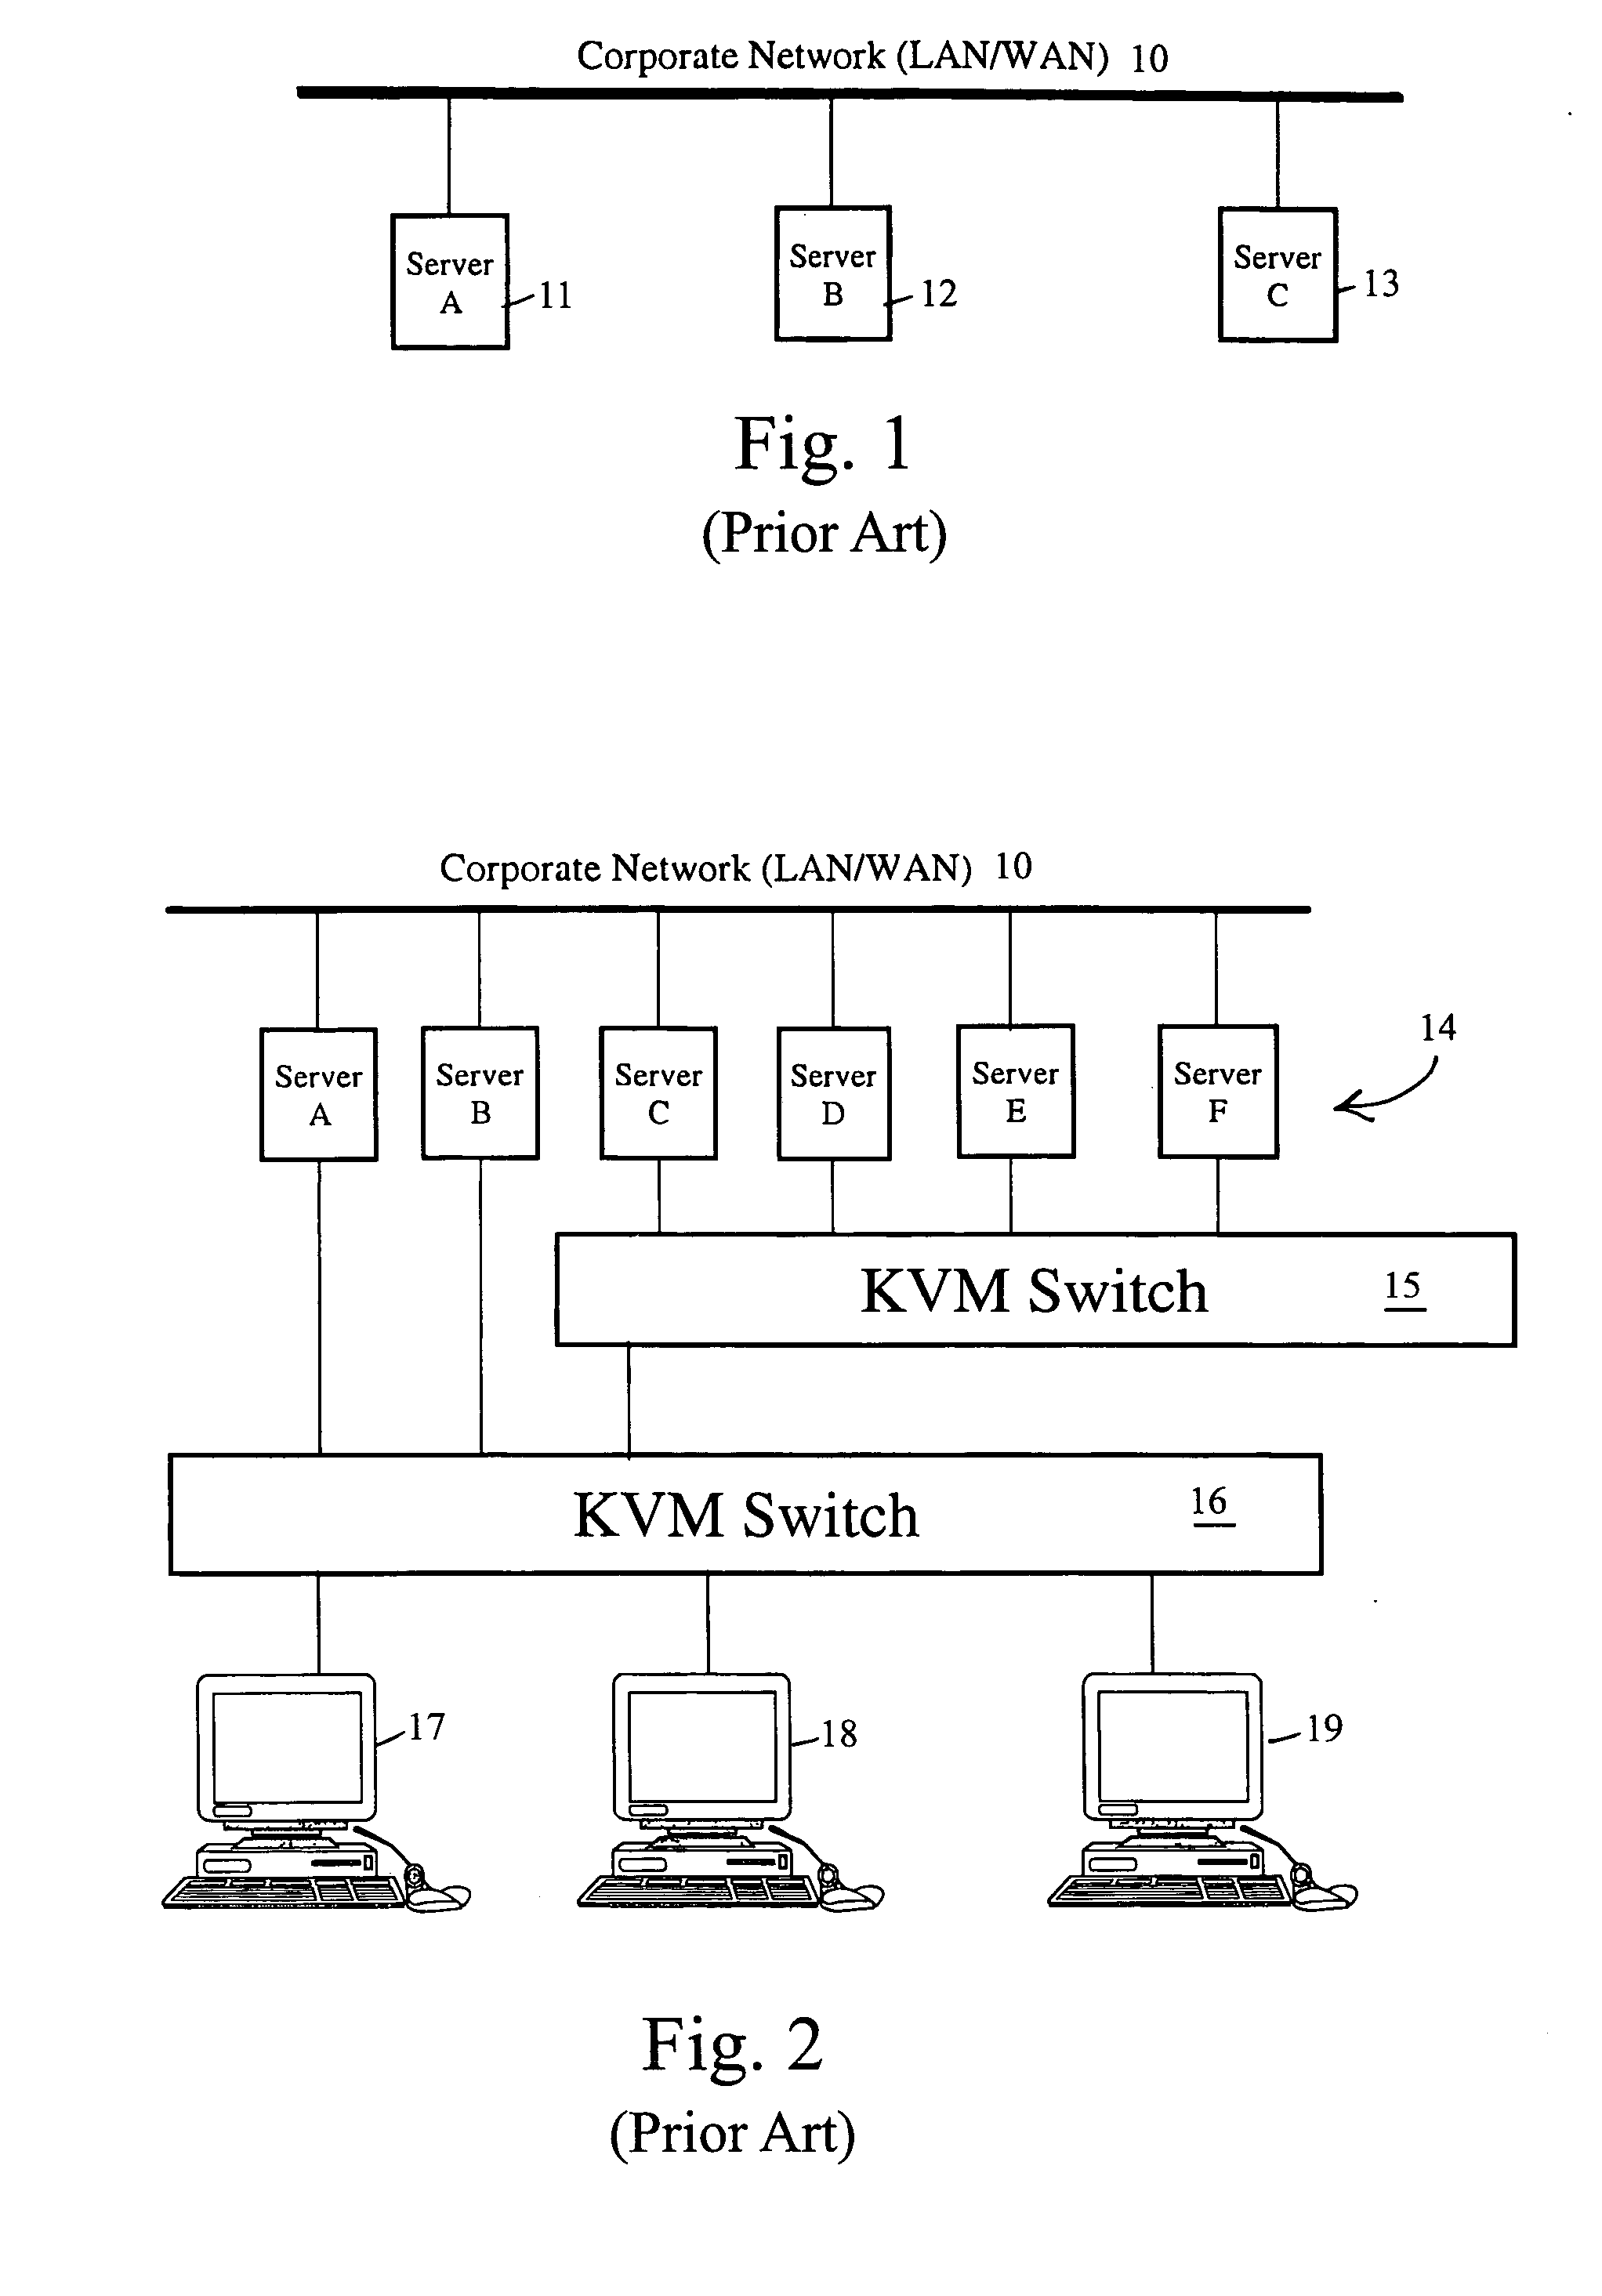 Network based KVM switching system